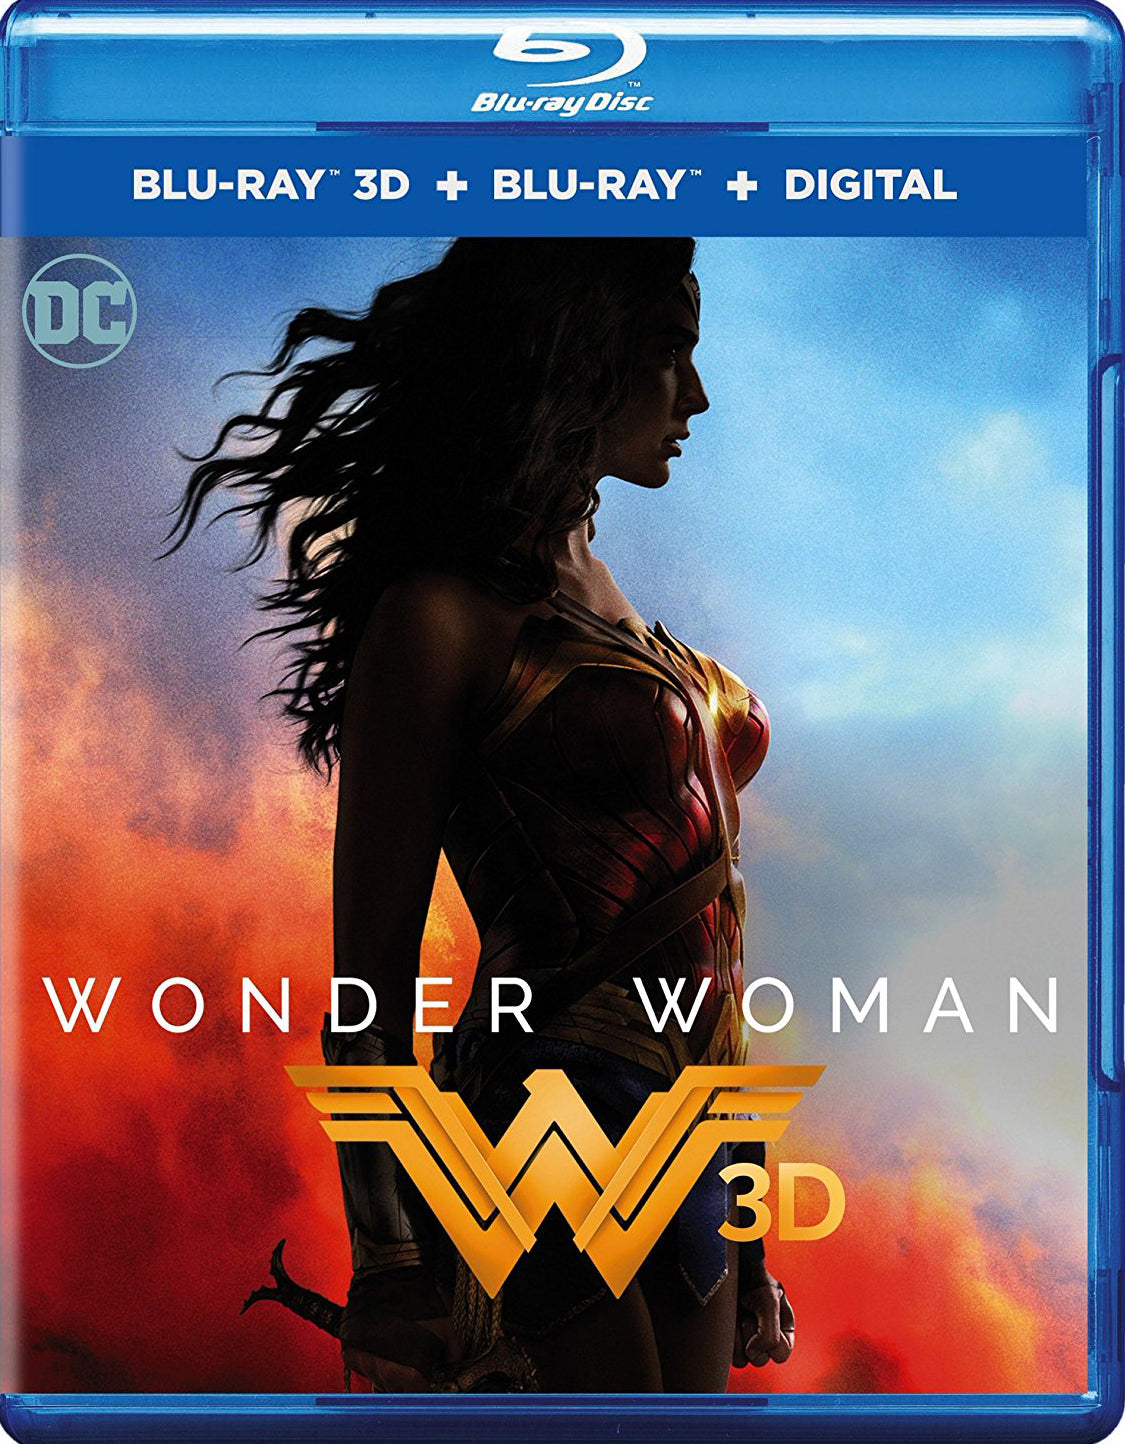 Wonder Woman [3D] [Includes Digital Copy] [Blu-ray] cover art